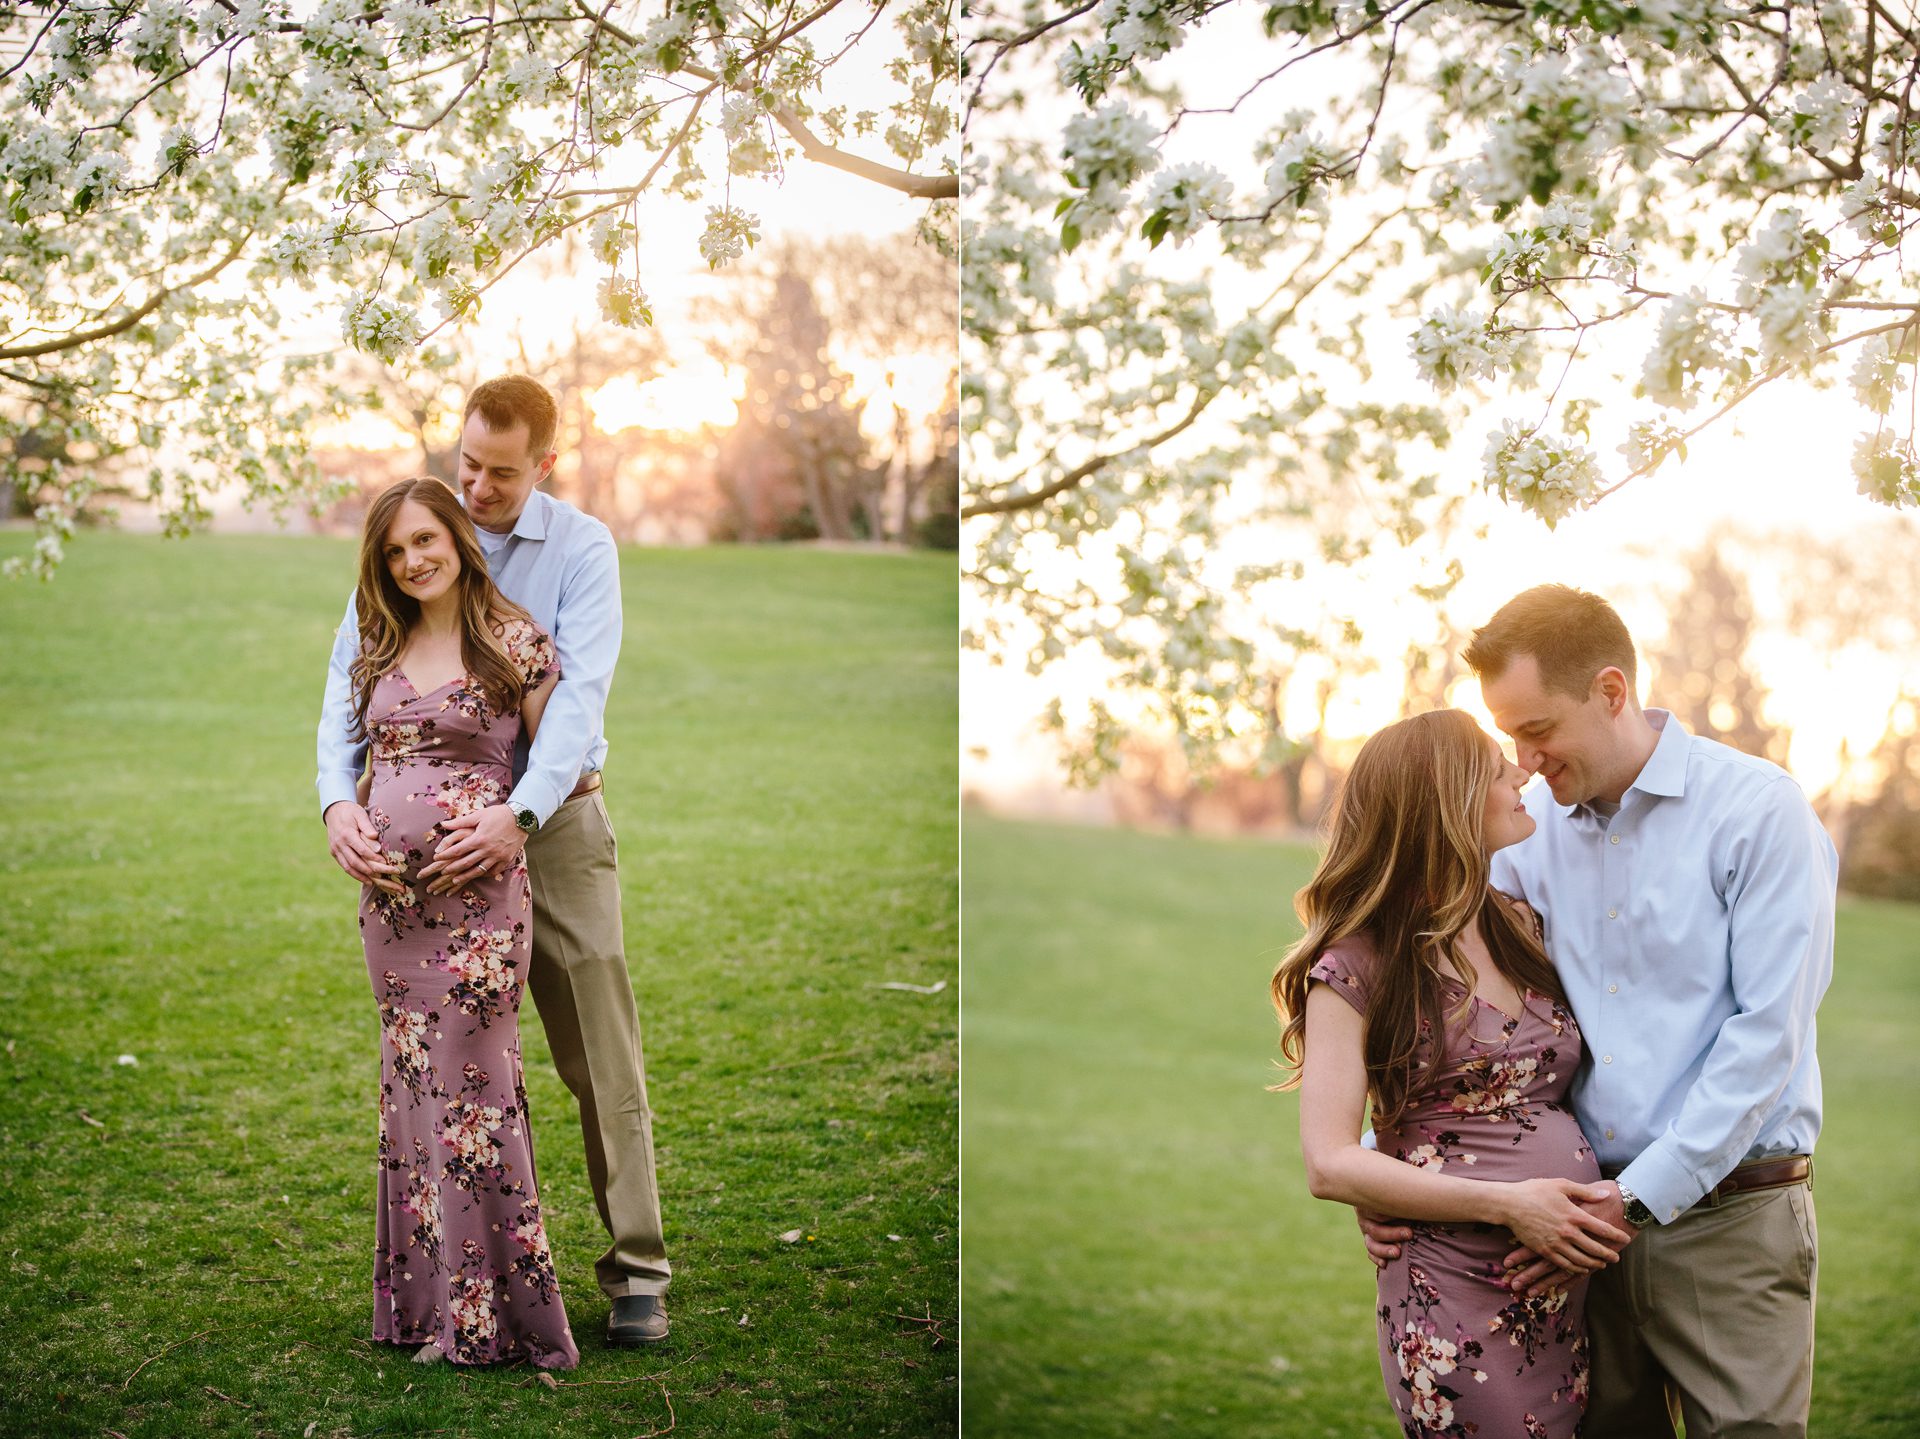 Spring maternity photos, Denver maternity photographer, spring flowers maternity photos, cherry blossoms, spring blossoms